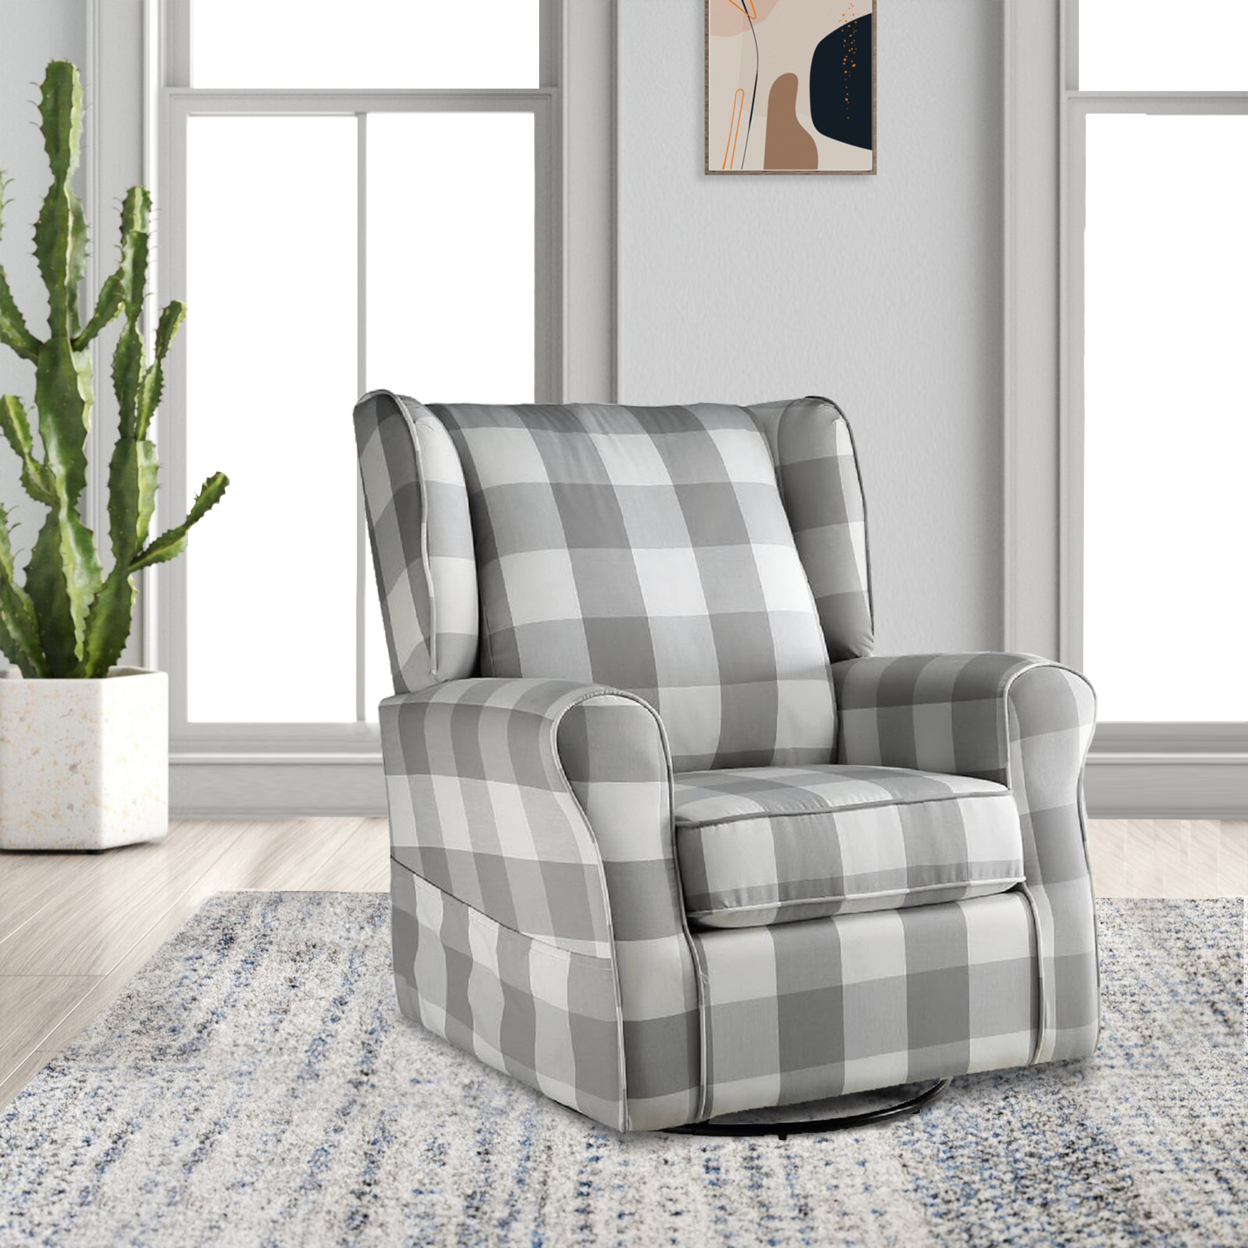 35 Inch Accent Swivel Chair, Glider, Checkered Fabric, Light Gray- Saltoro Sherpi